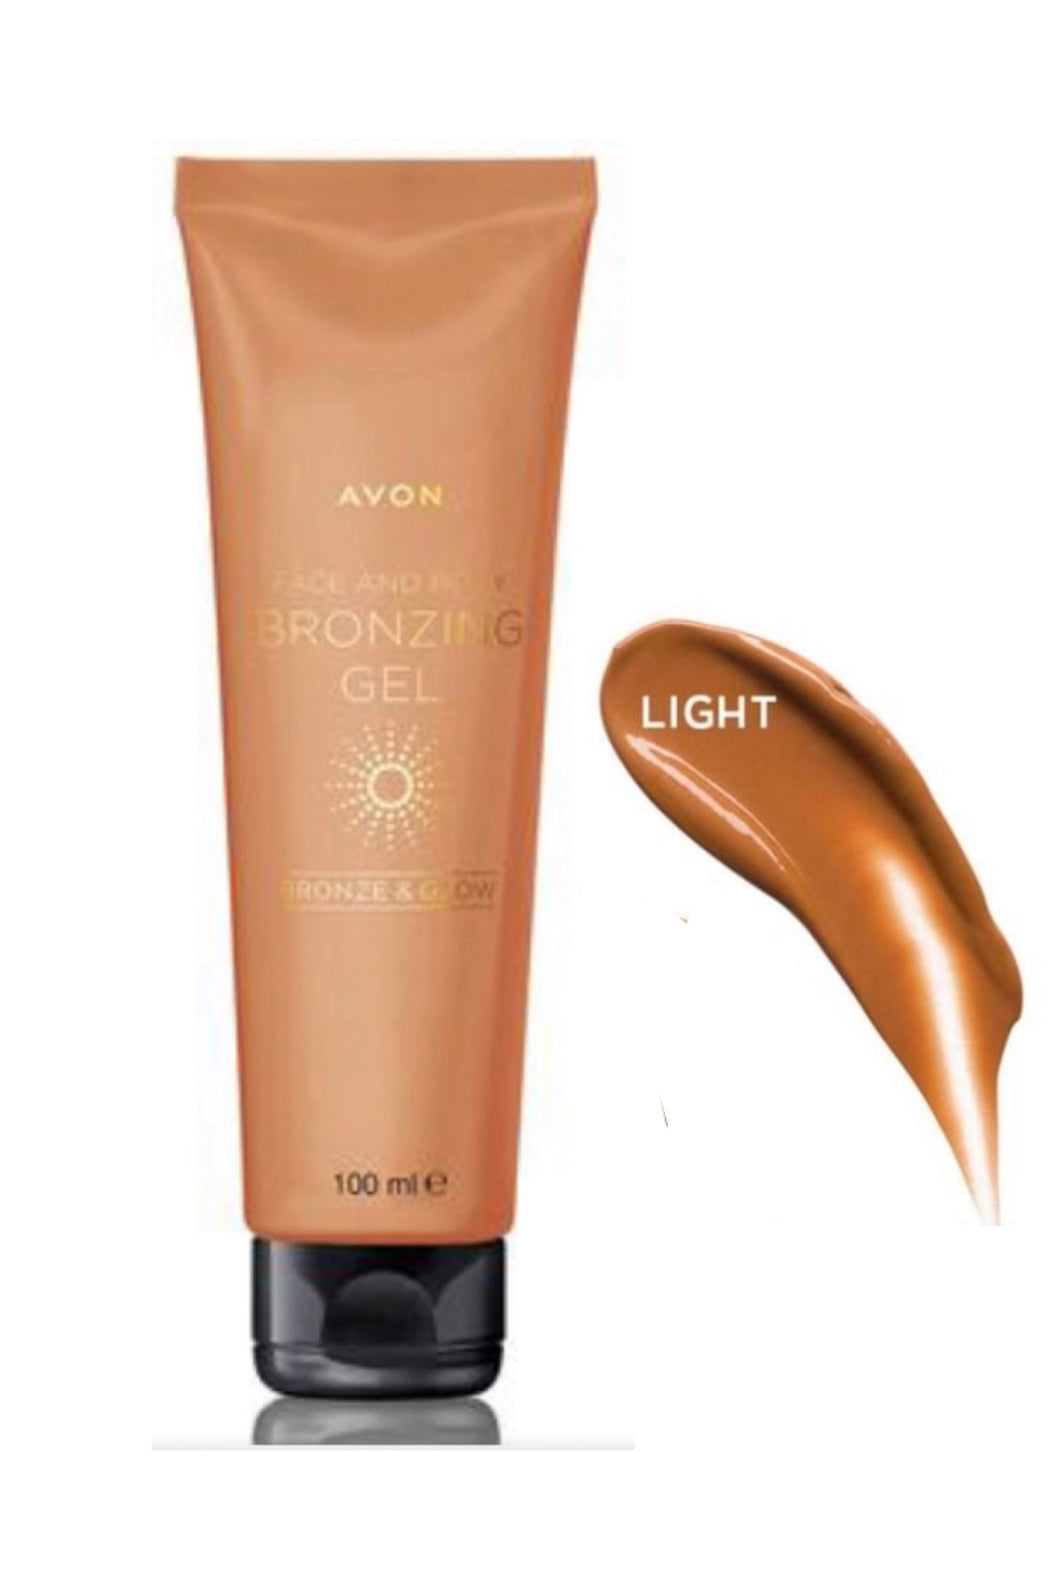 Avon Bronze & Glow Face and Body Gel 100ml Light Bronze